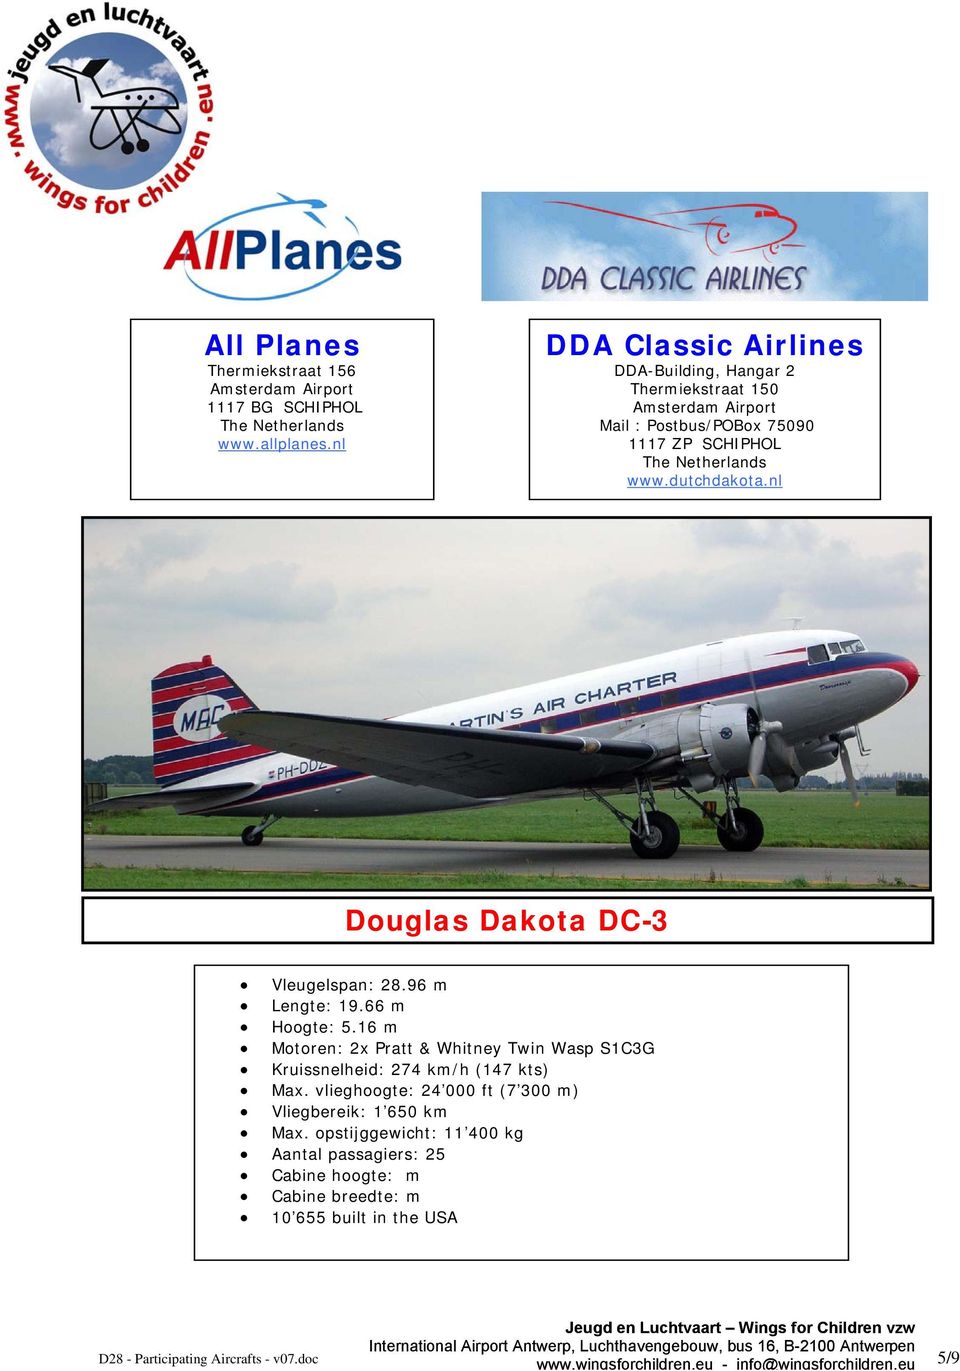 dutchdakota.nl Douglas Dakota DC-3 Vleugelspan: 28.96 m Lengte: 19.66 m Hoogte: 5.